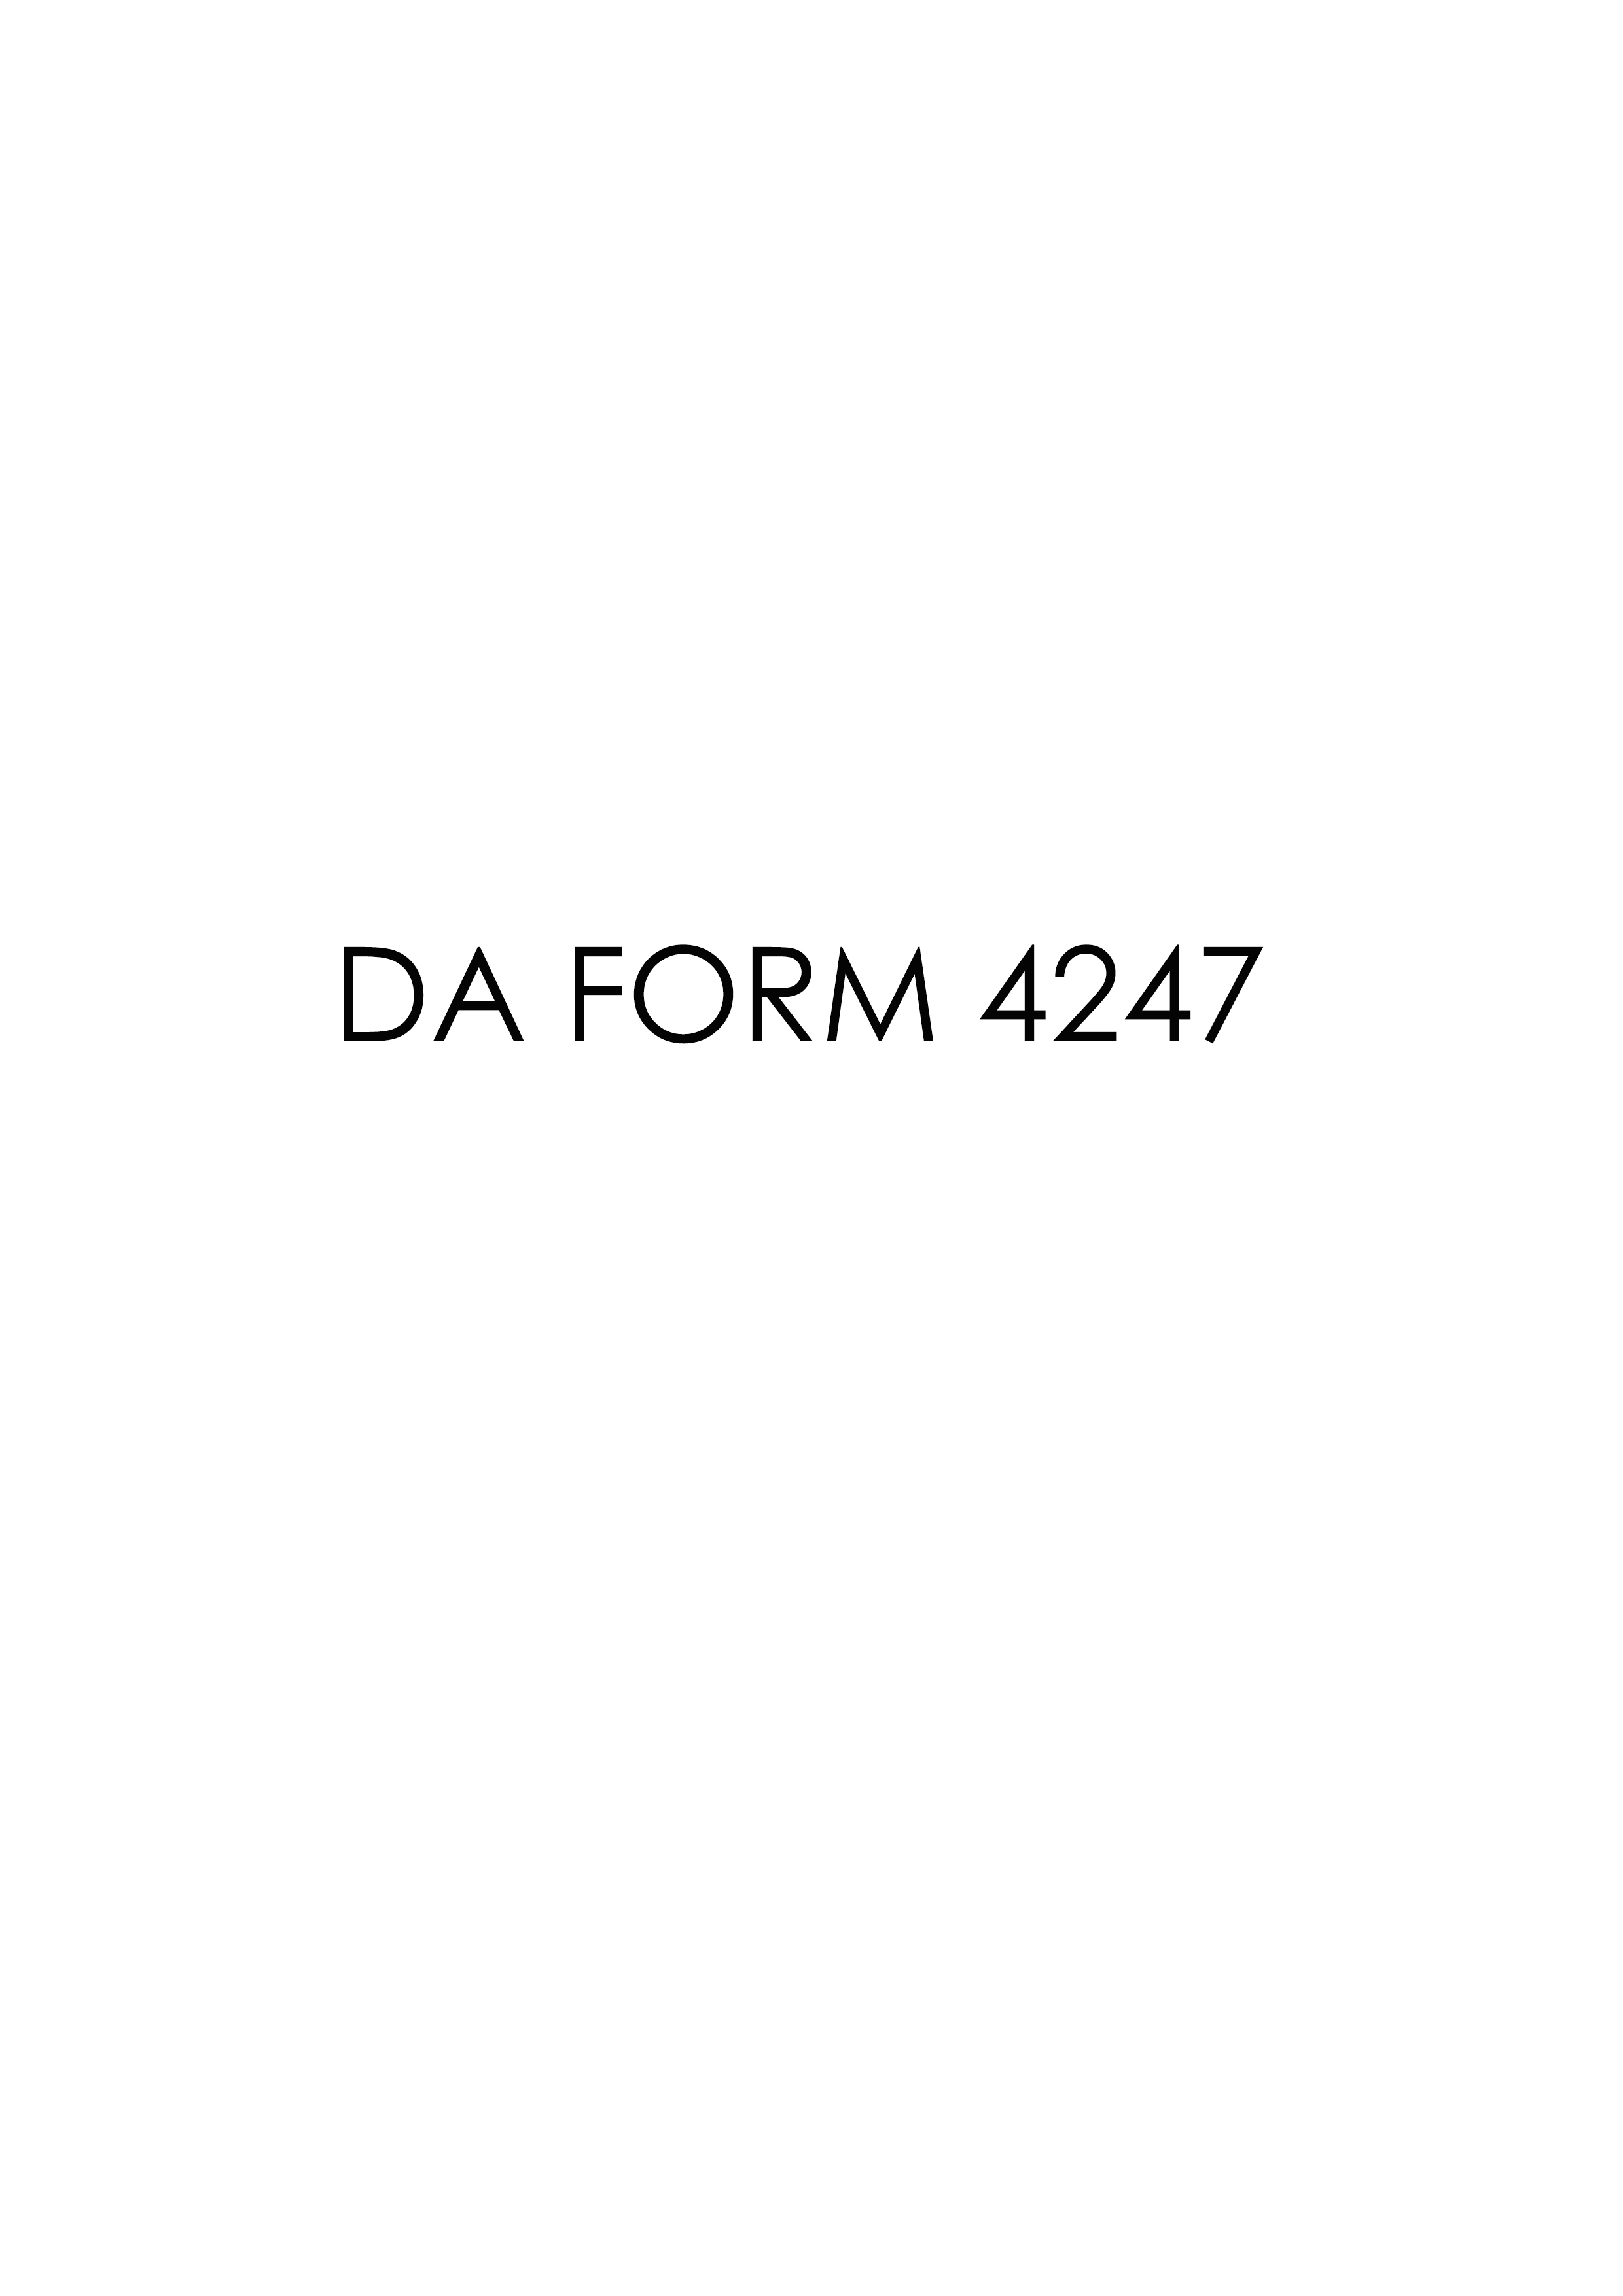 da Form 4247 fillable